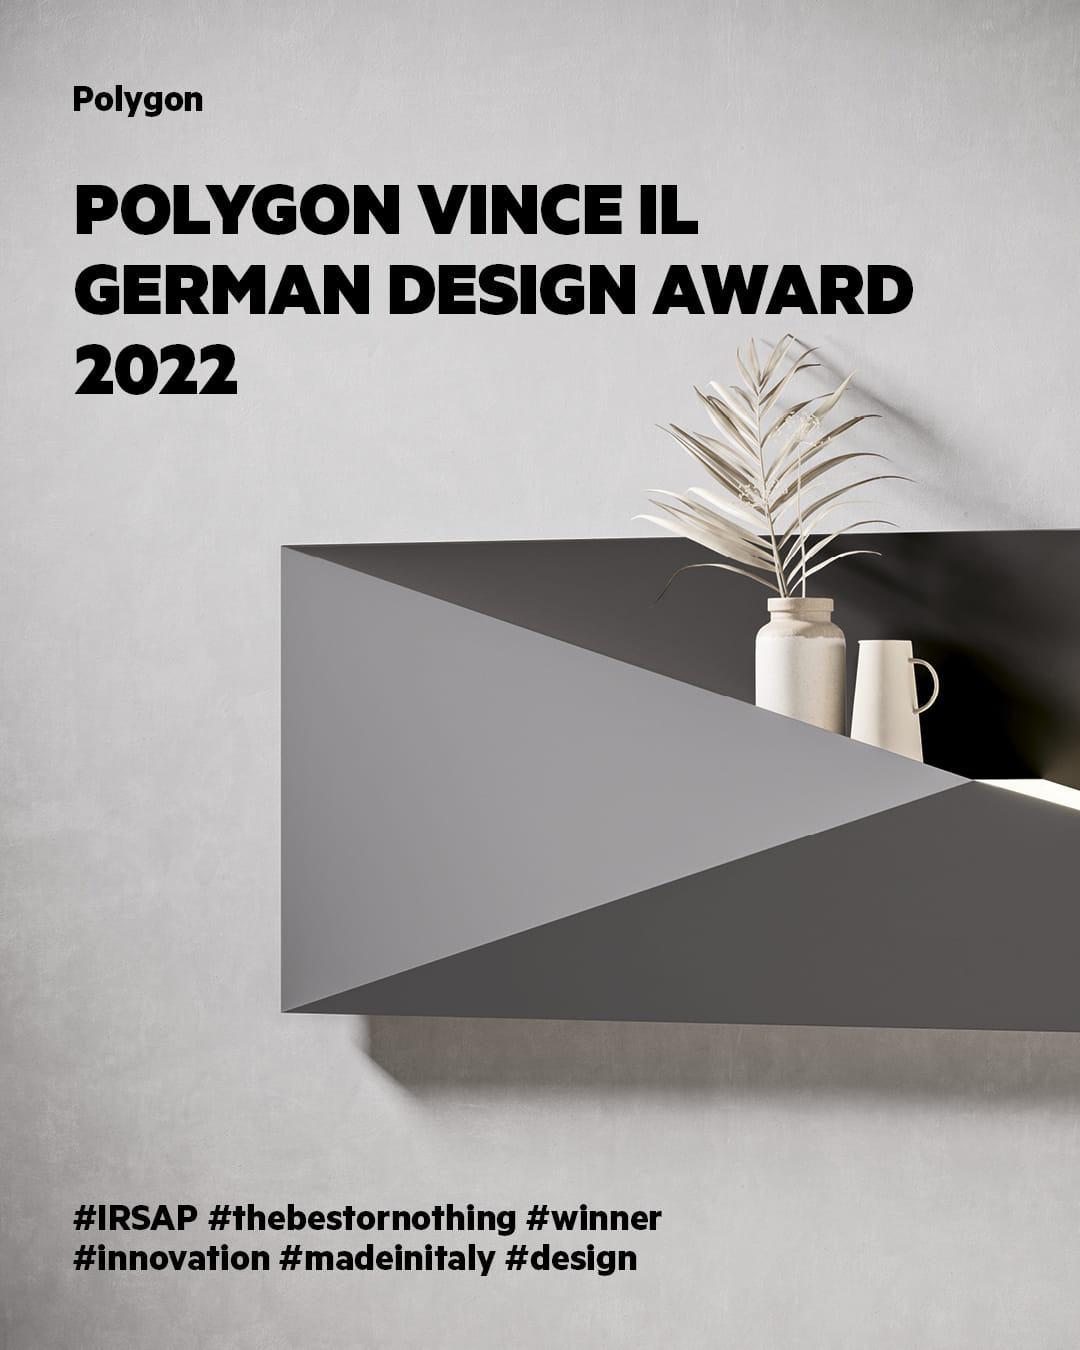 Polygon remporte le German Design Award 2022